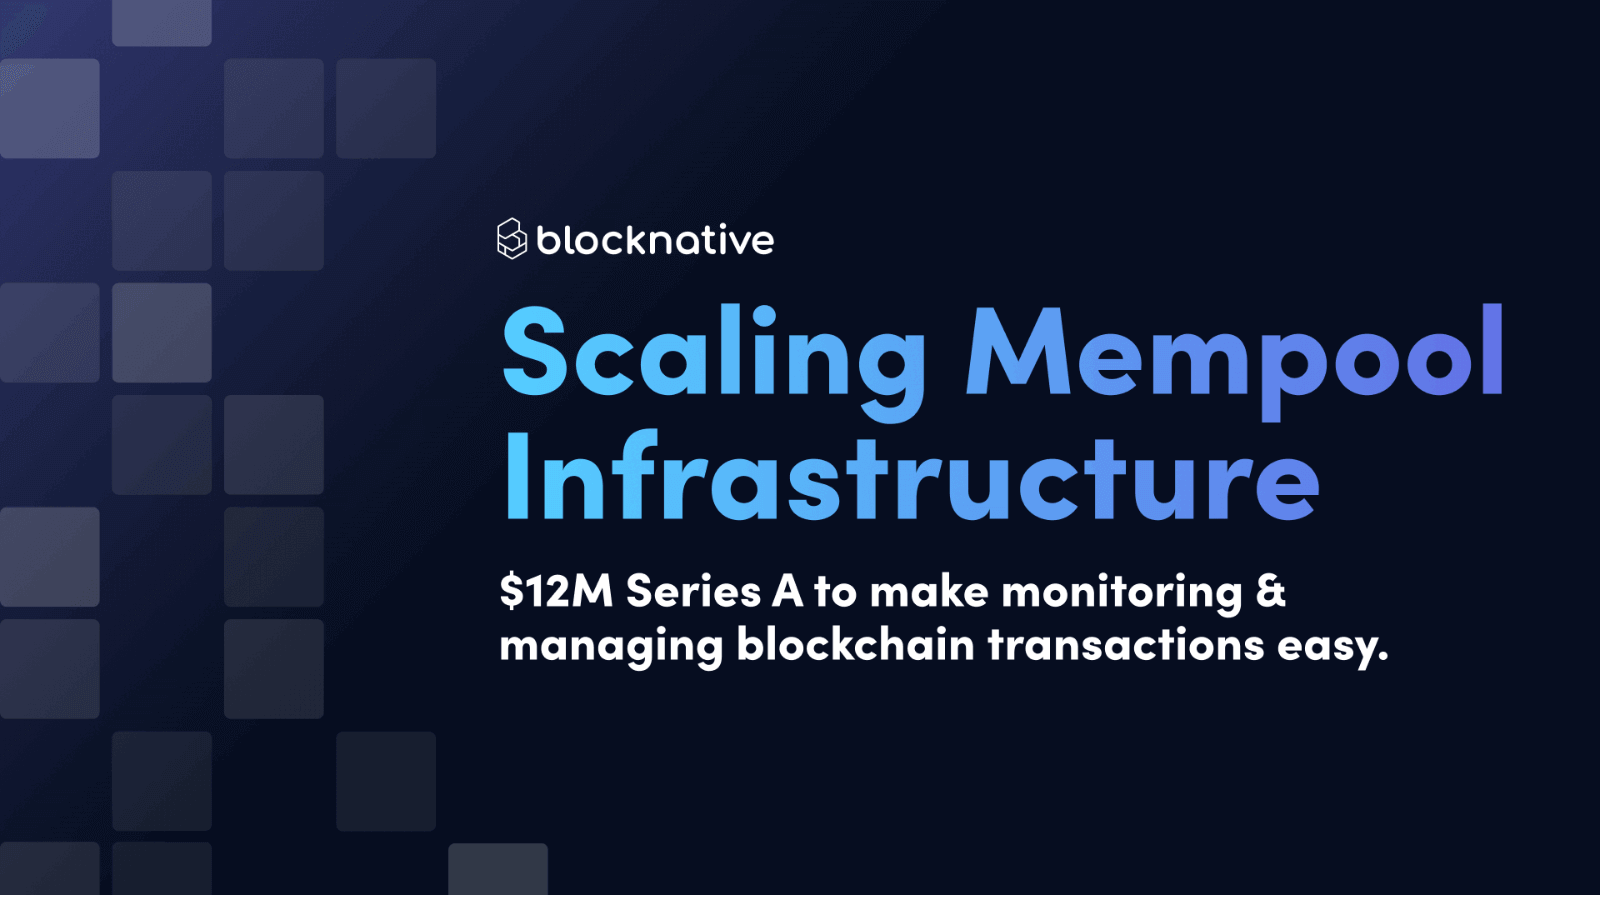 blocknative-raises-$12-million-to-scale-core-transaction-monitoring-infrastructure